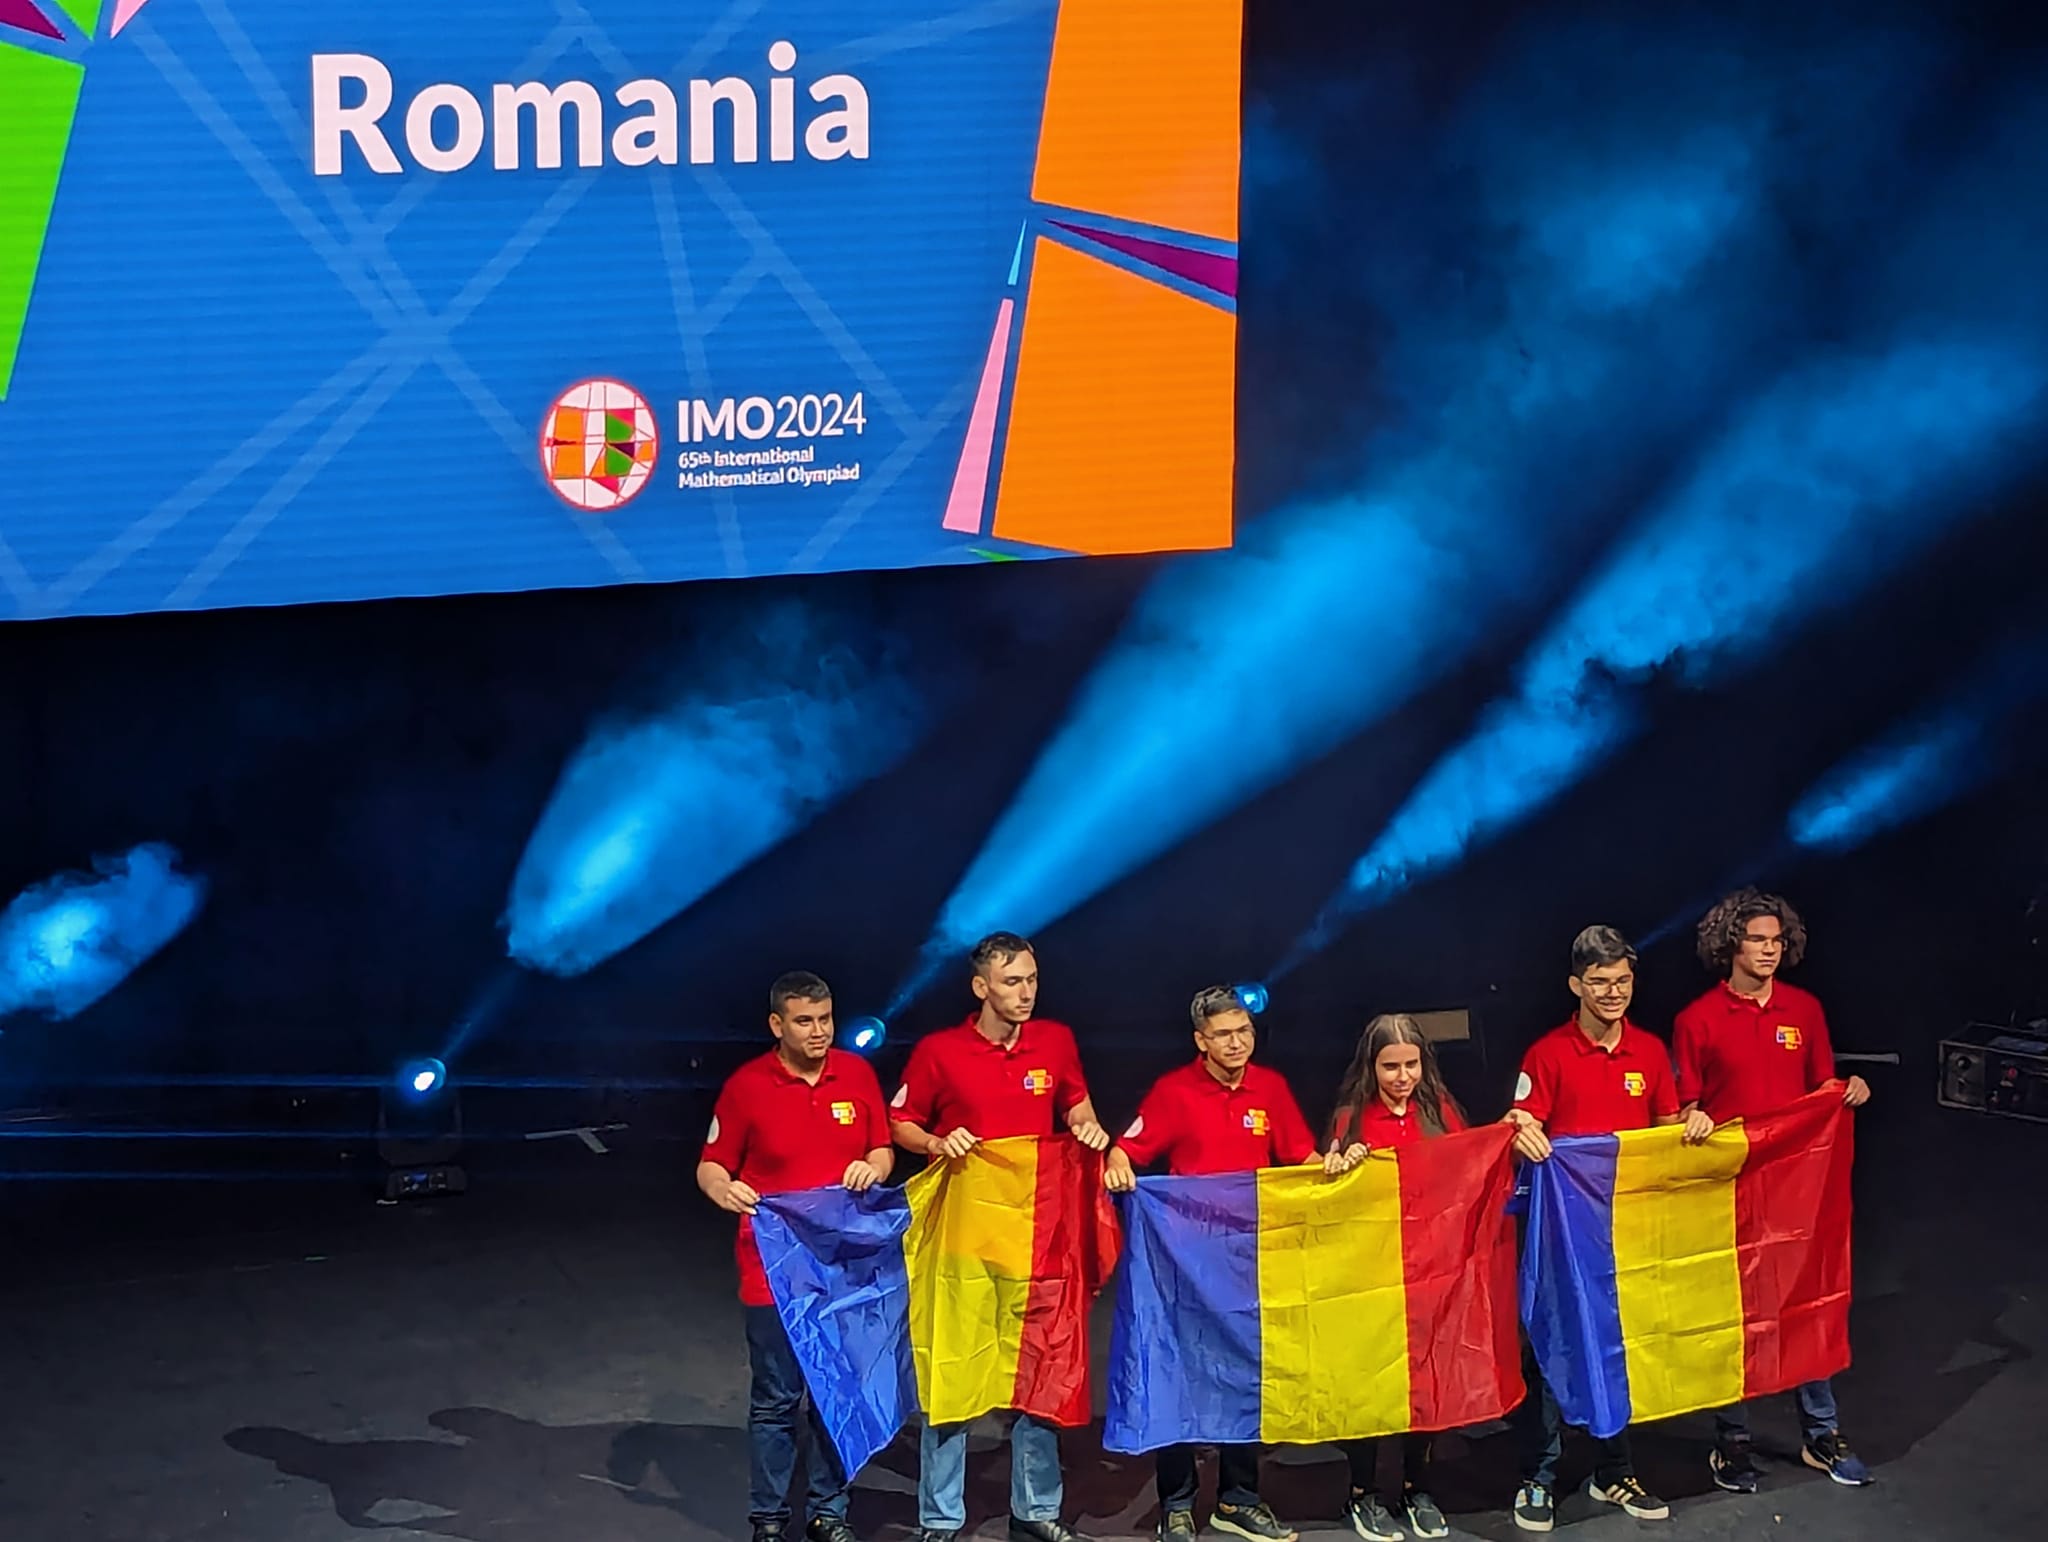 Romania won 6 medals at the International Mathematics Olympiad